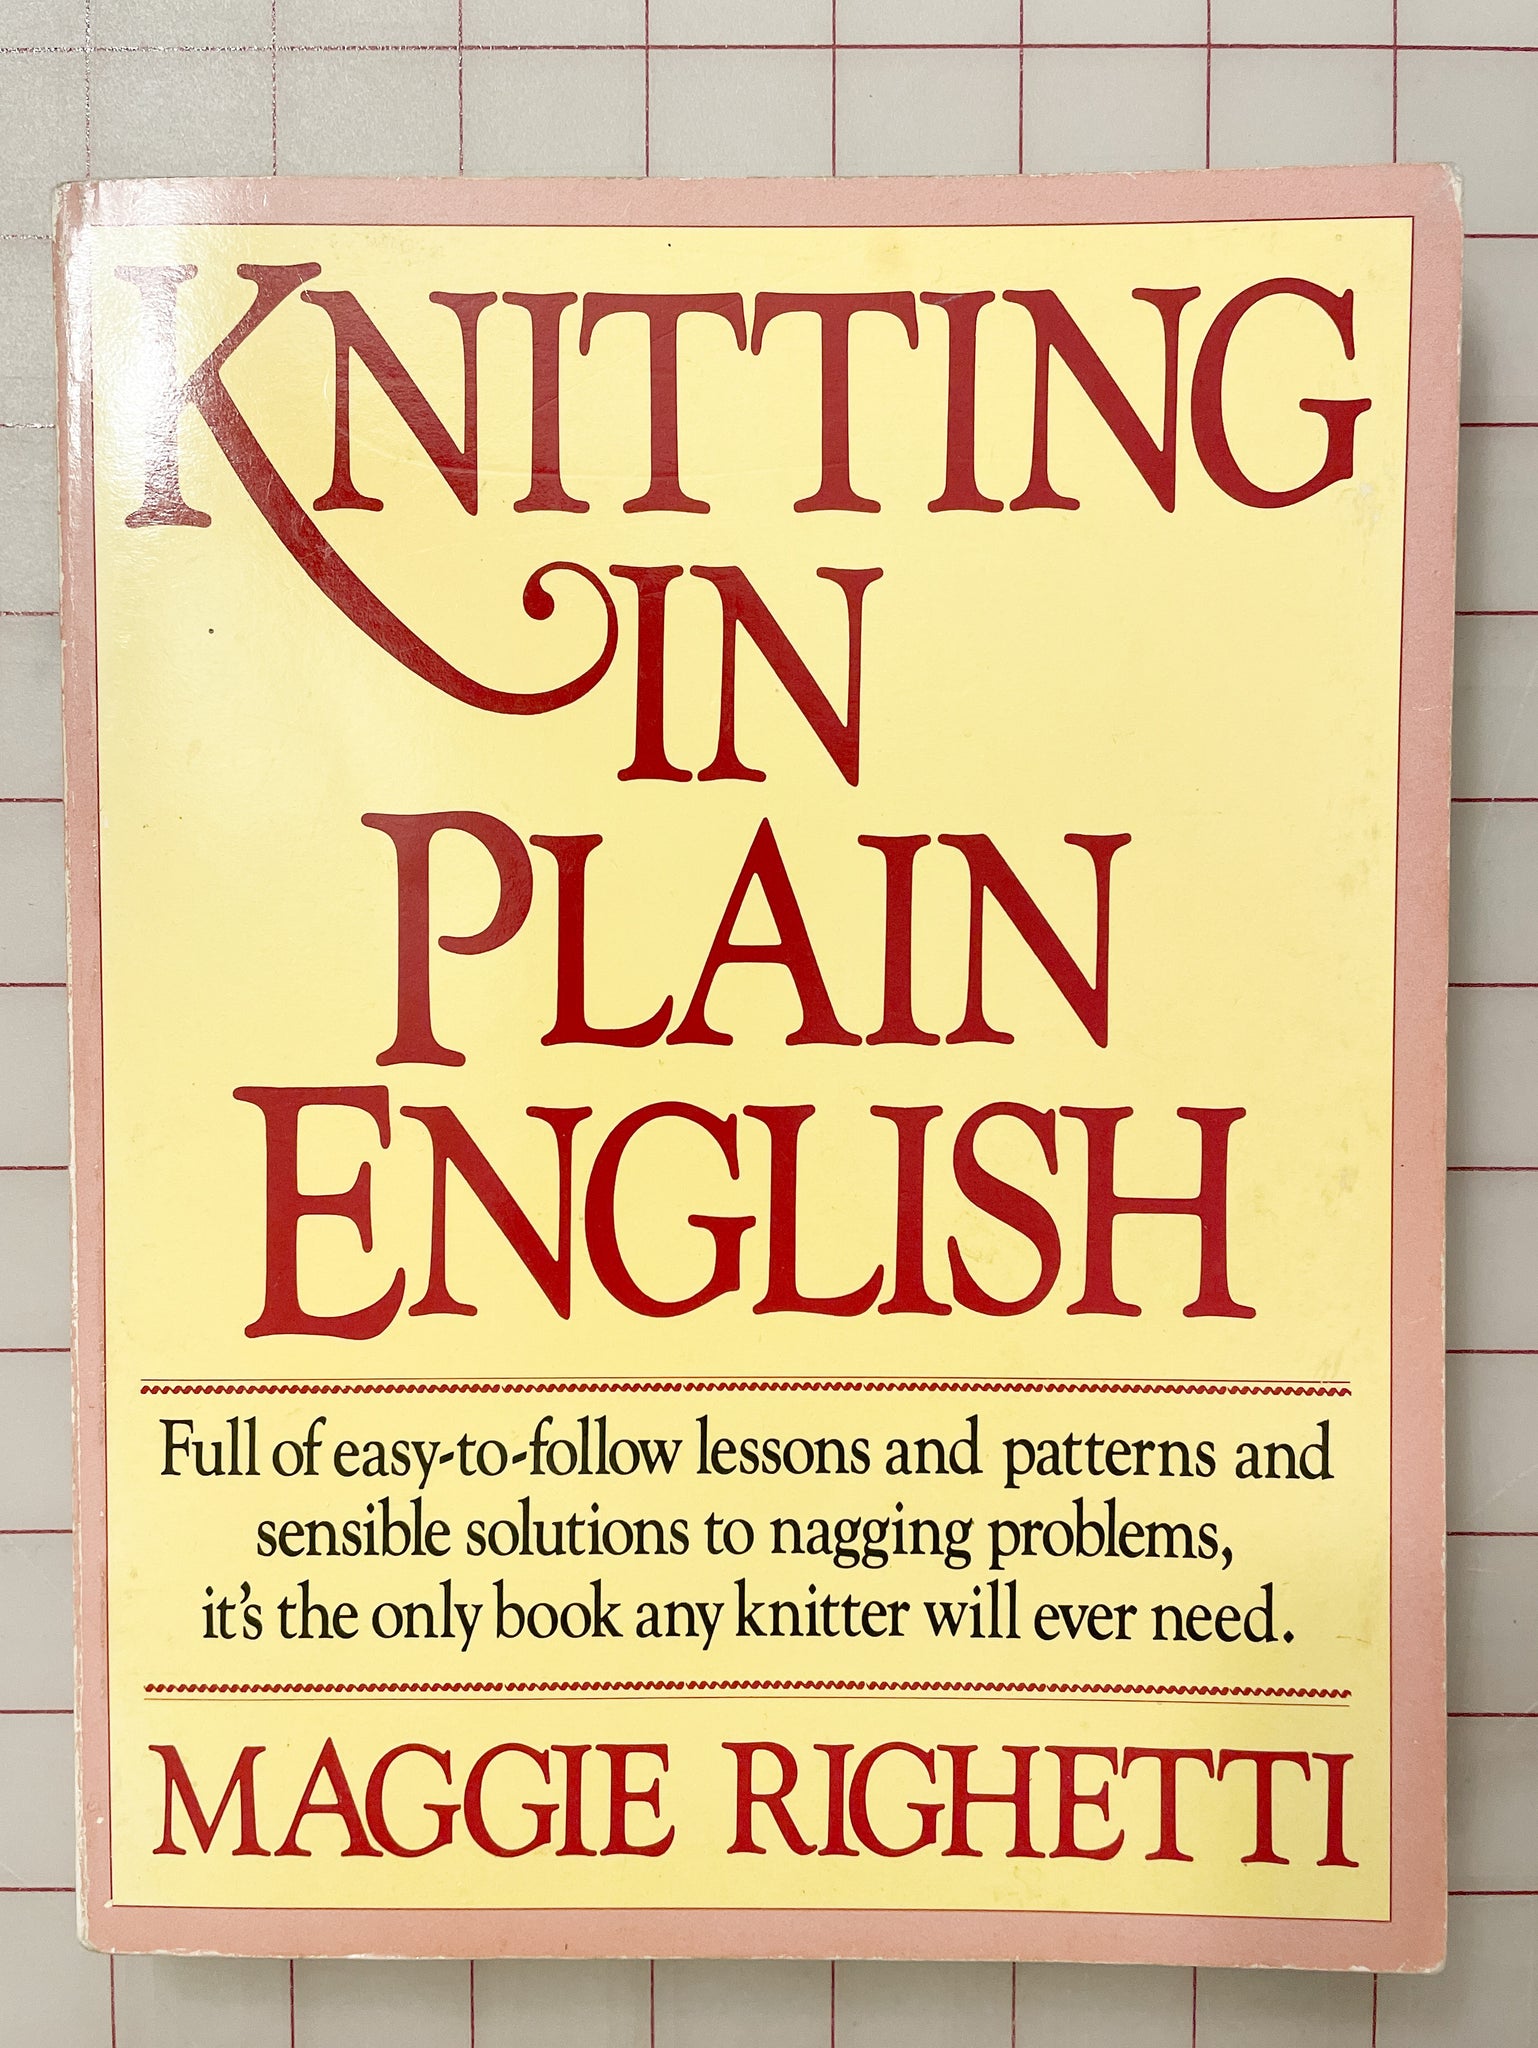 SALE 1986 Knitting Book - "Knitting in Plain English"